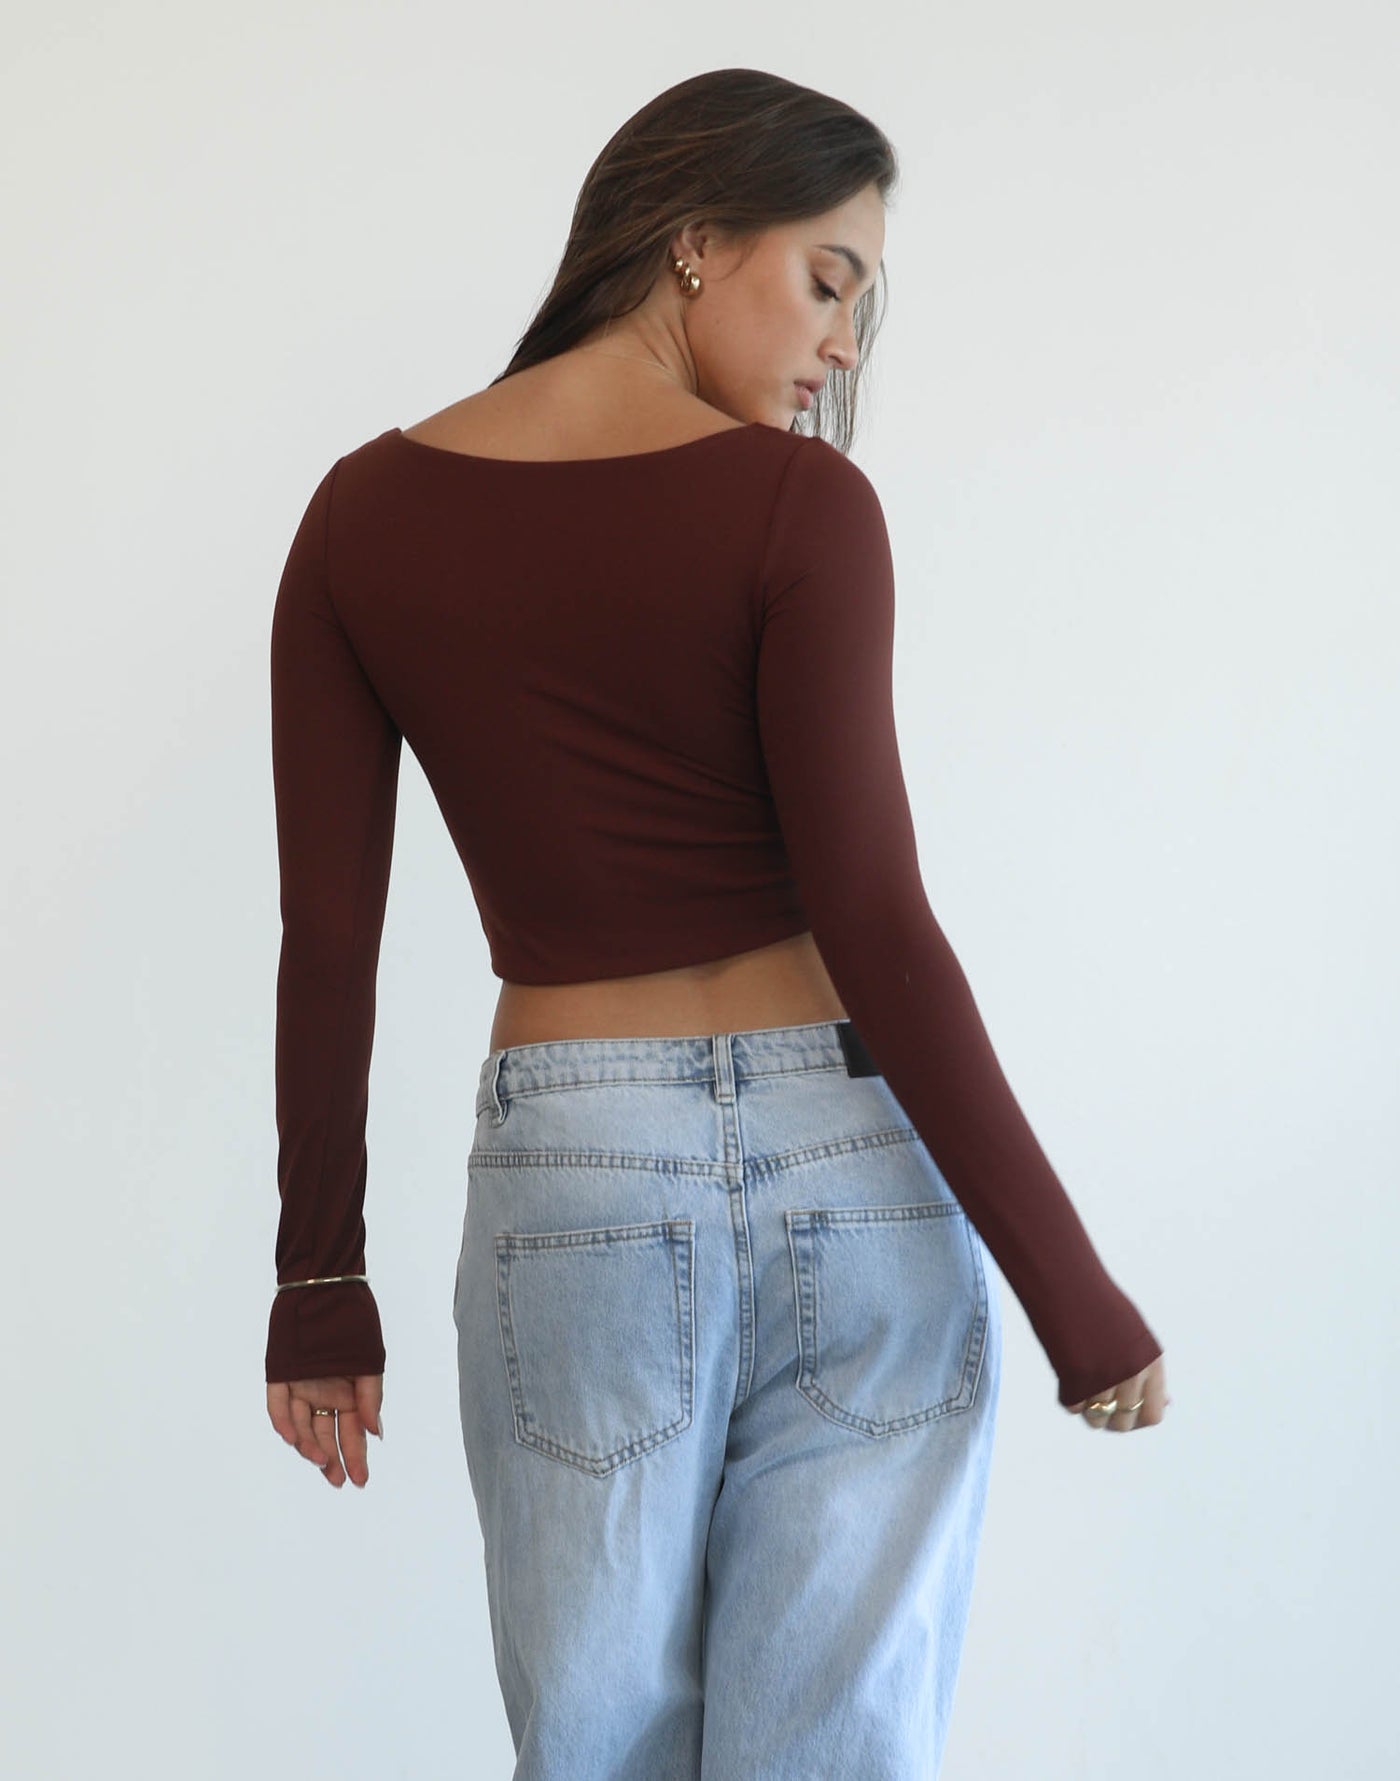 Mendes Long Sleeve Crop Top (Brown) - Long Sleeve Crop Top - Women's Top - Charcoal Clothing